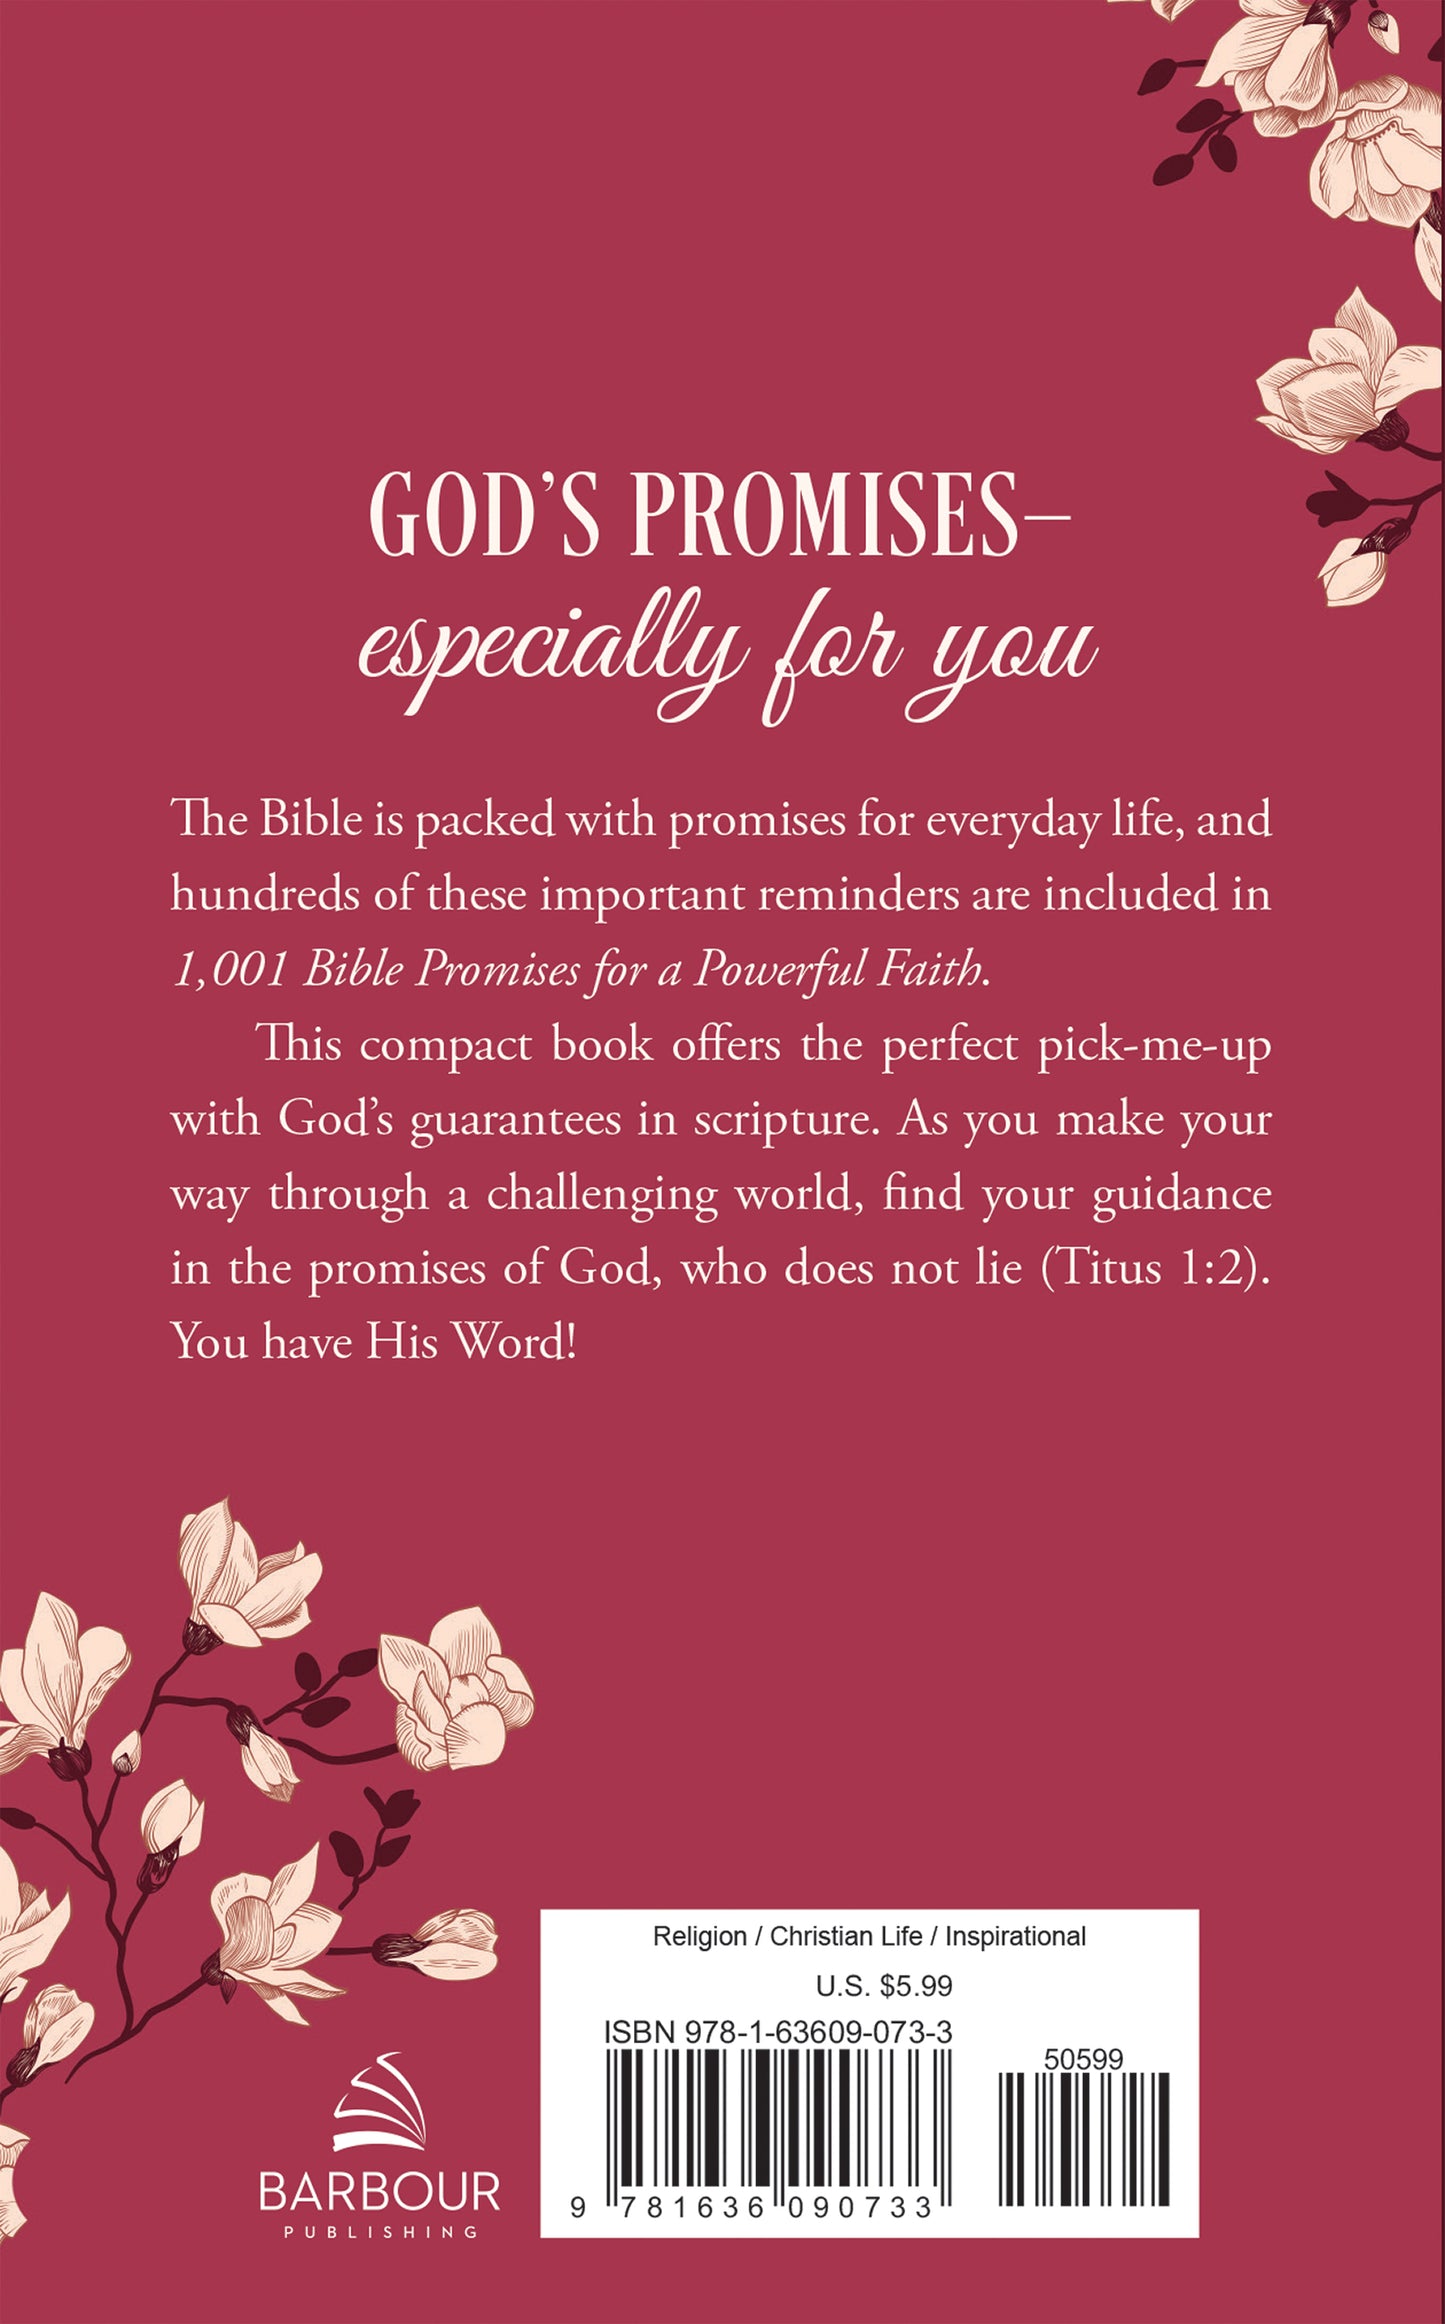 1001 Bible Promises for a Powerful Faith - The Christian Gift Company